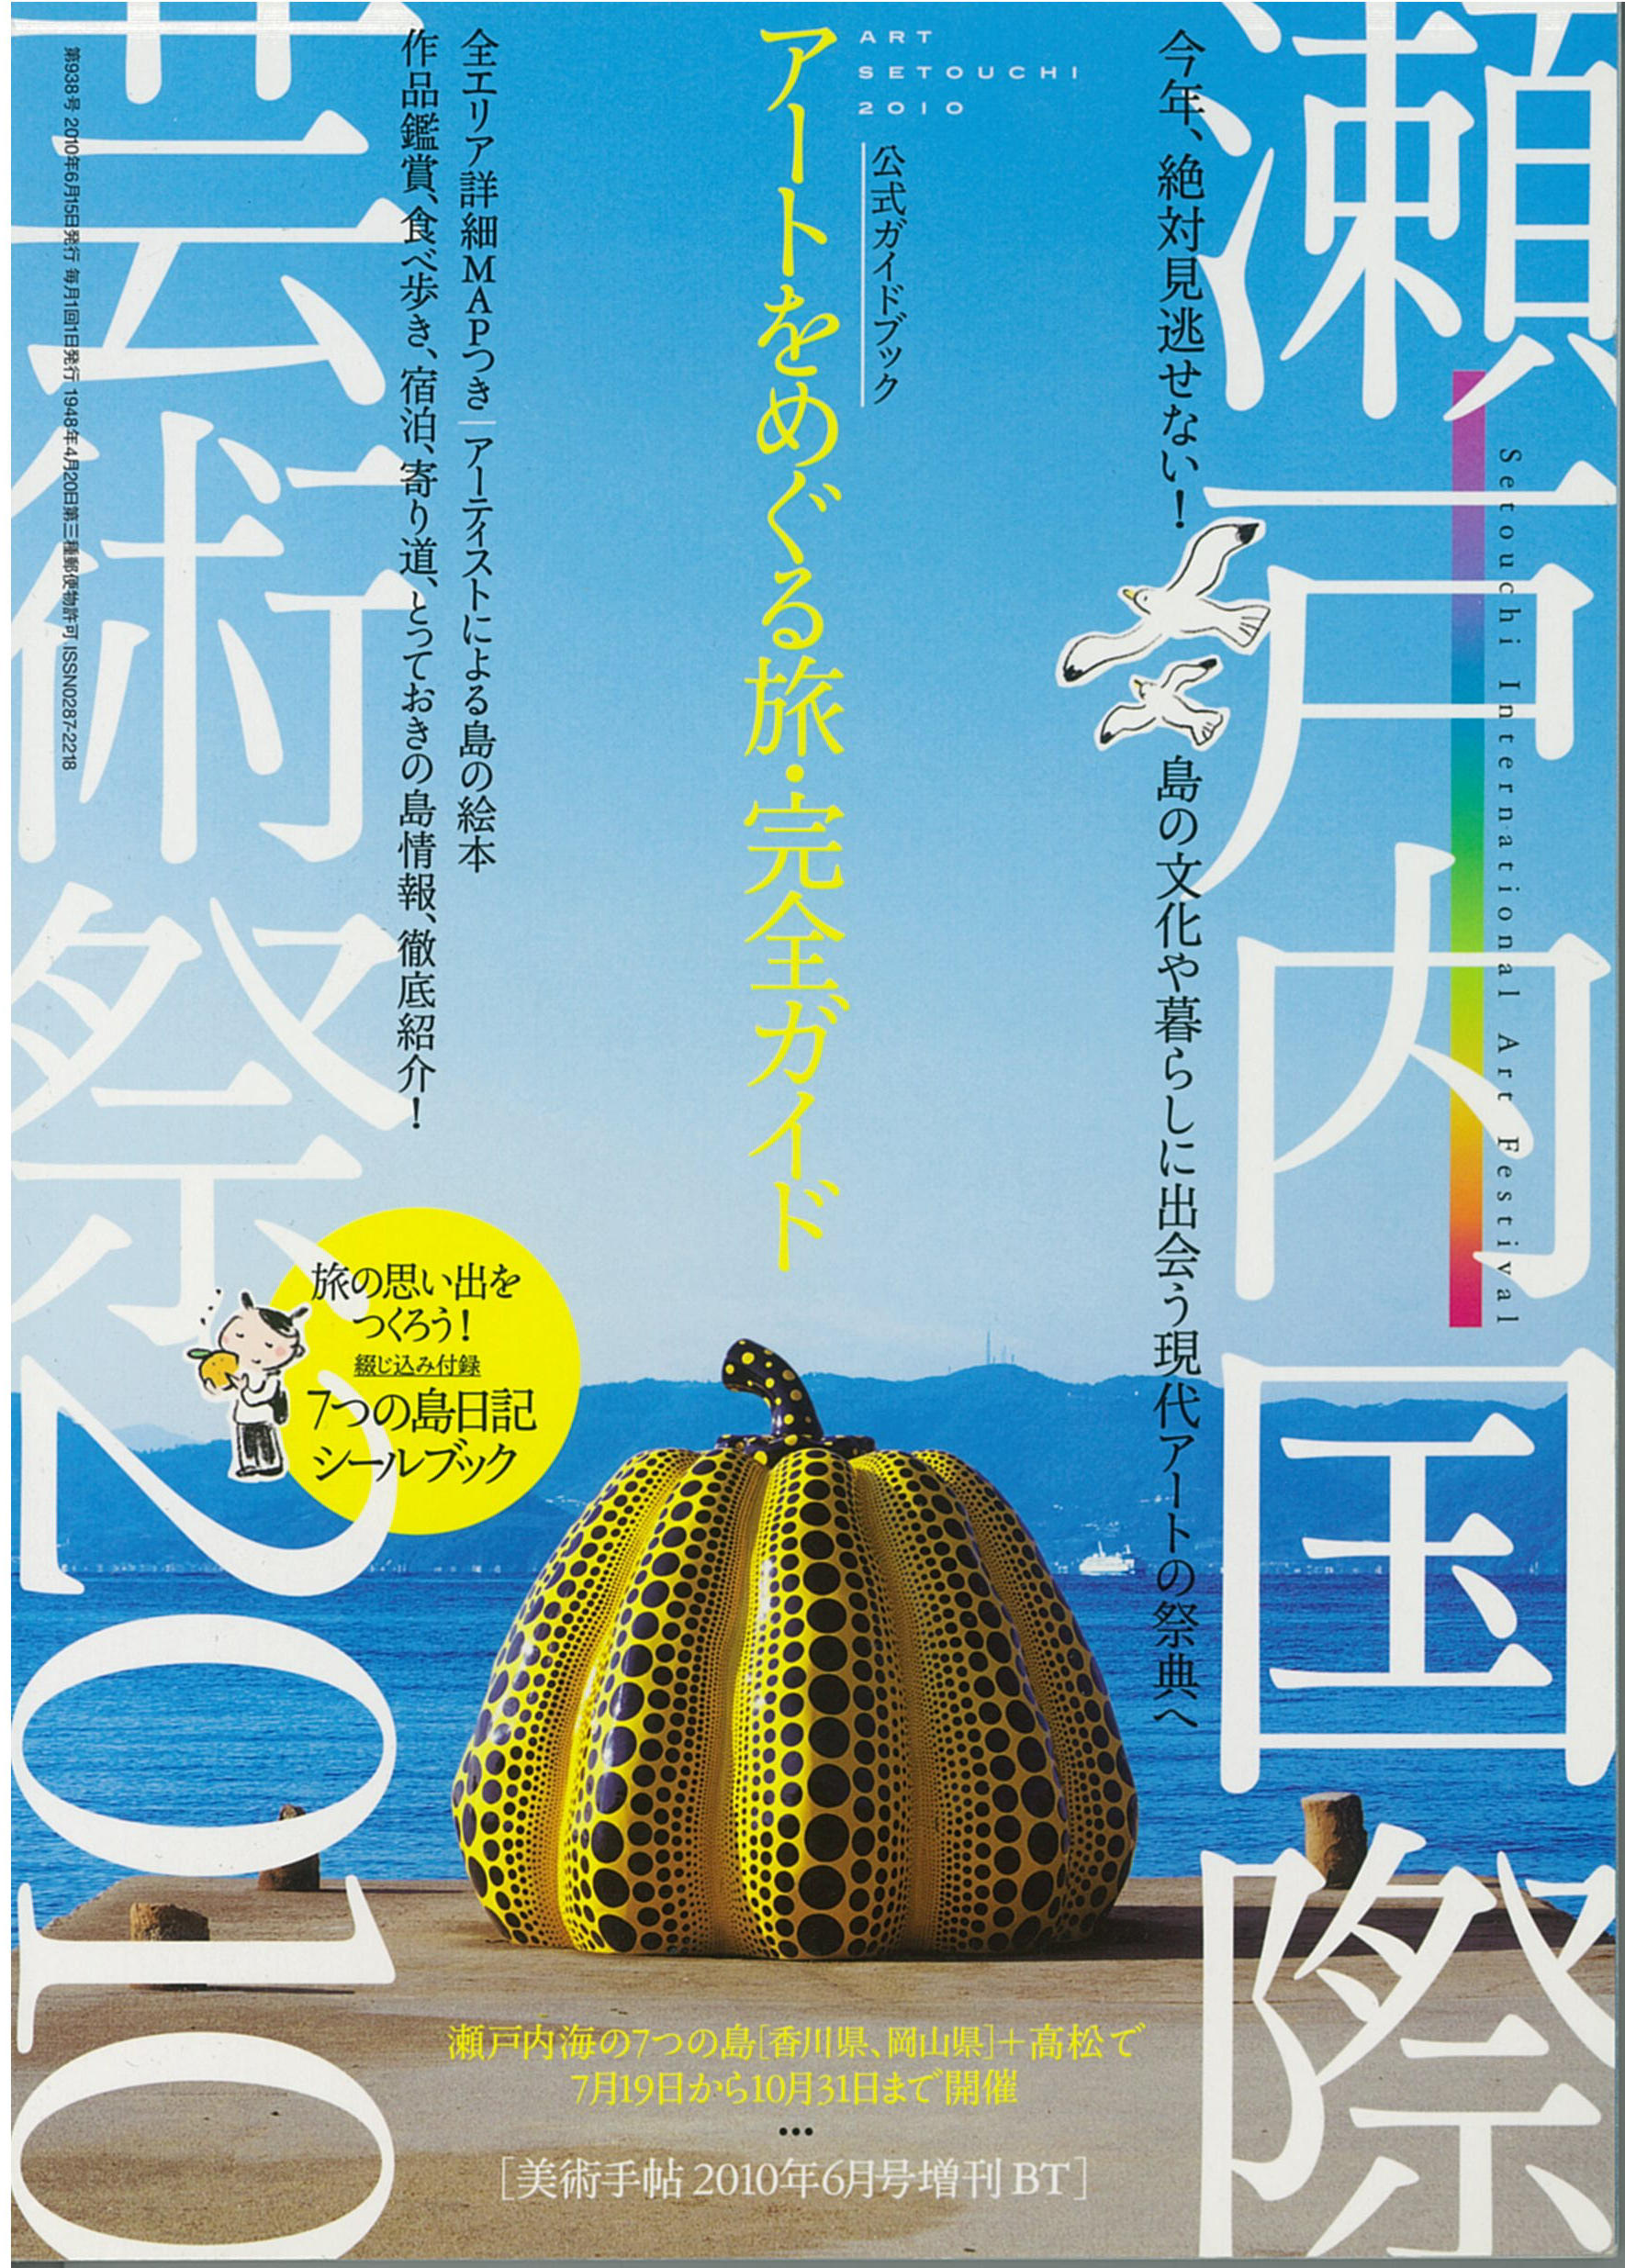 Official guide book Setouchi Triennale 2010